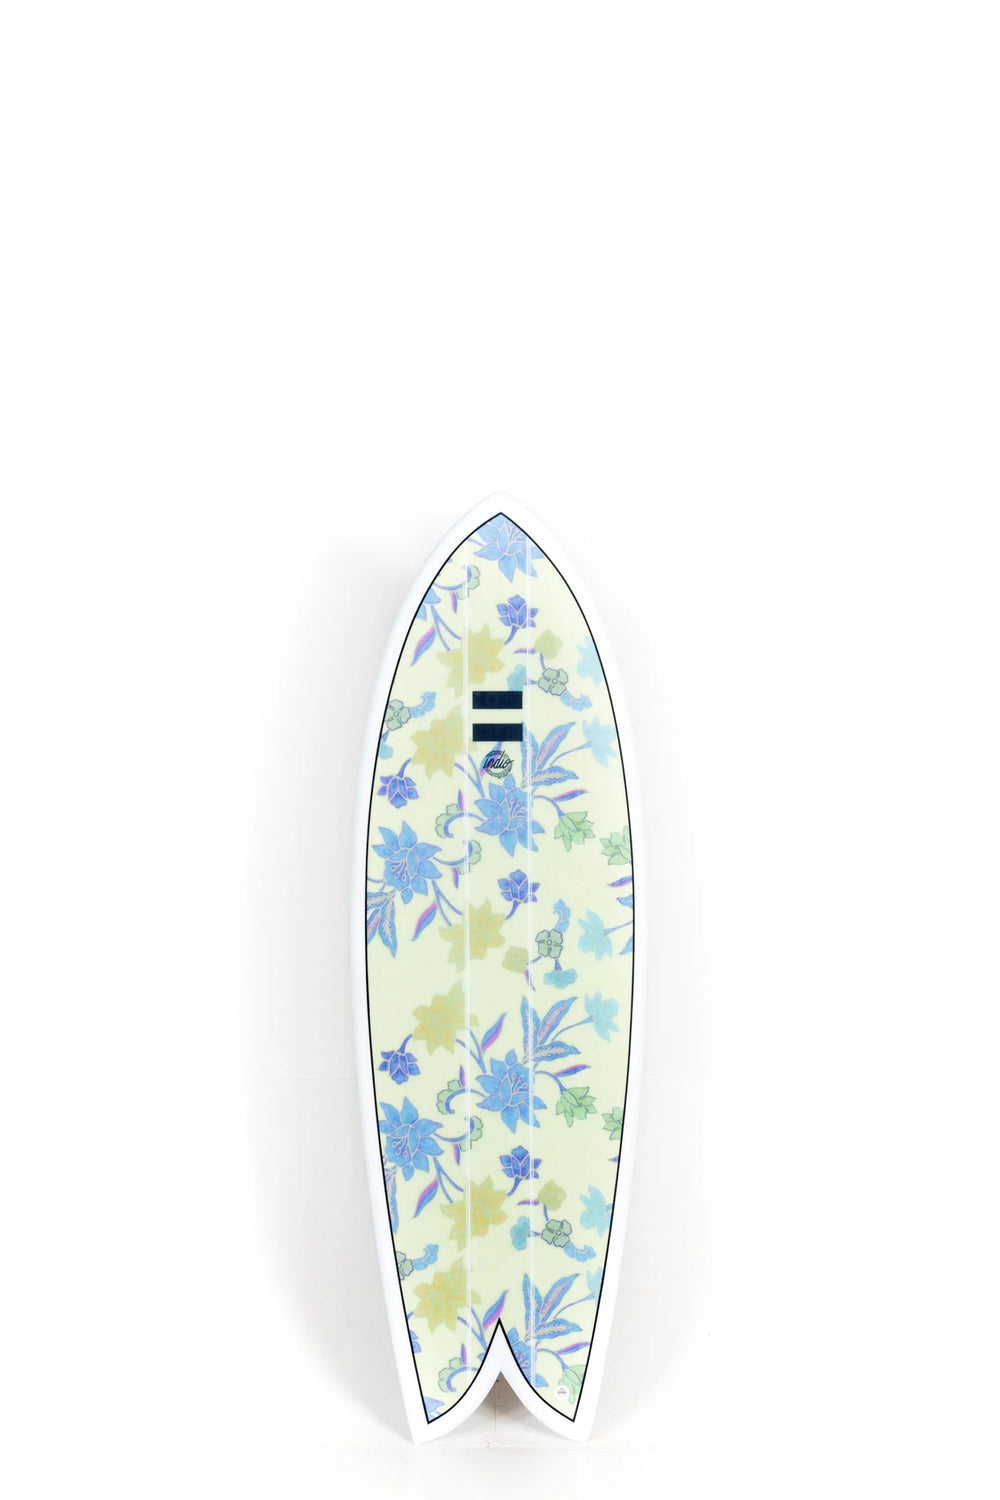 Indio Surfboards - DAB Flowers - 5’11” x 21 1/4 x 2 5/8 x 39.9L.